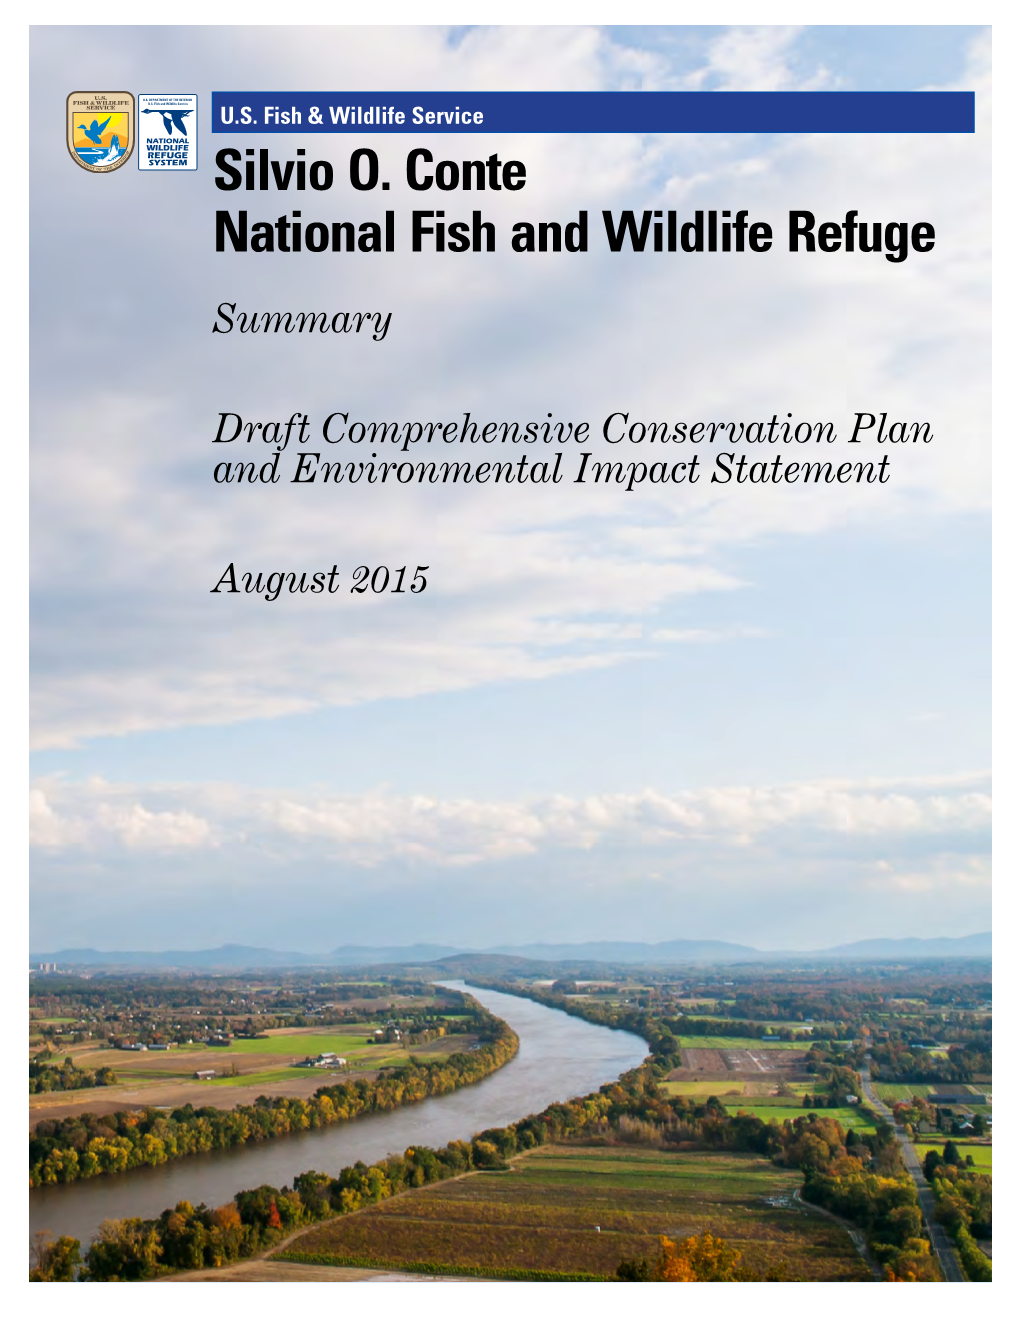 Silvio O. Conte National Fish and Wildlife Refuge Summary